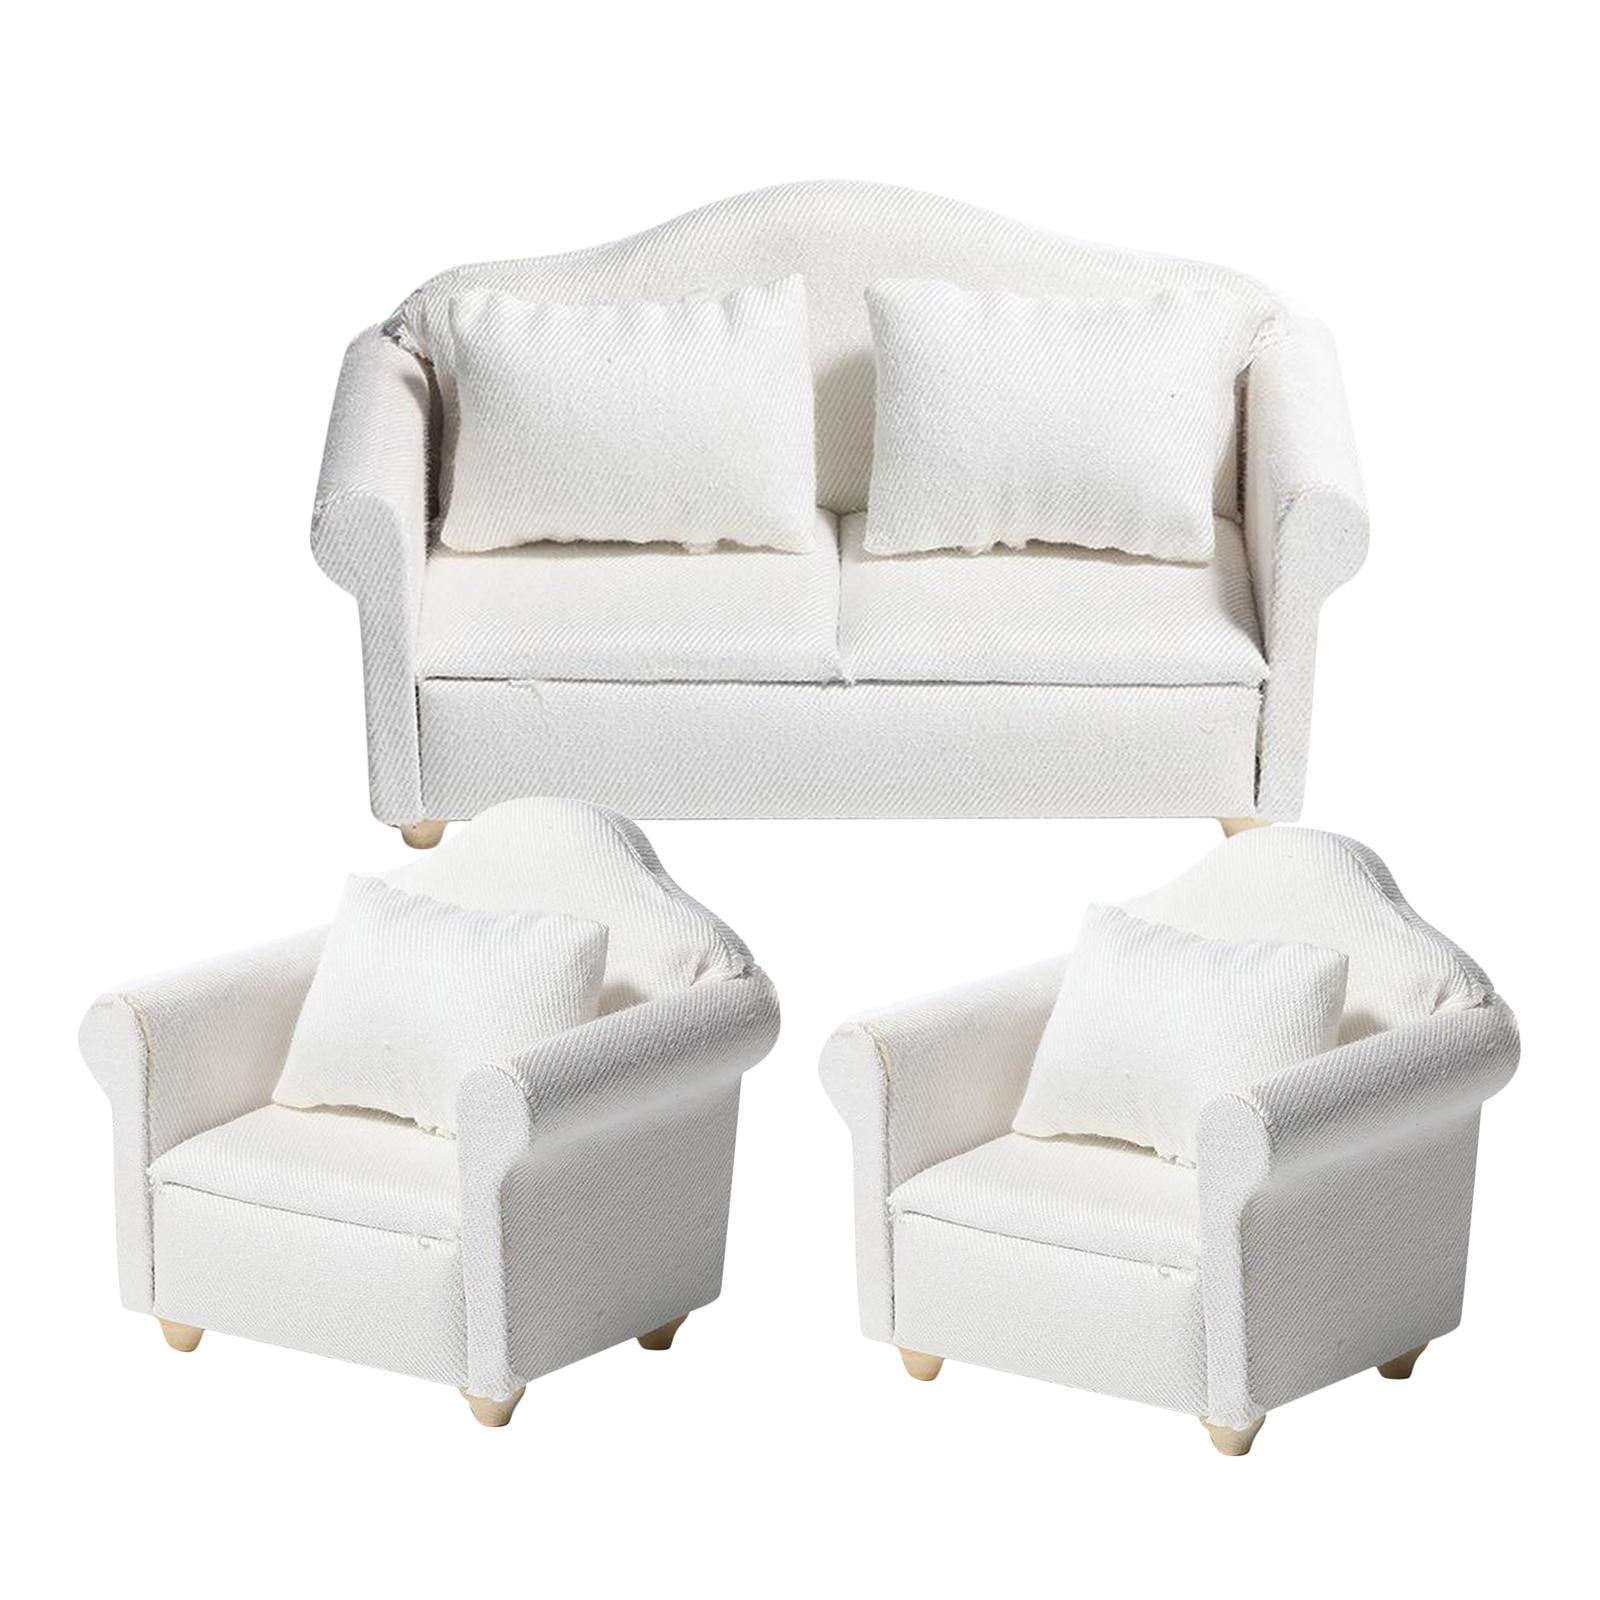 3 Dollhouse Miniature Living Room Furniture Sofa Armchair Couch Cushion Set 1:12 